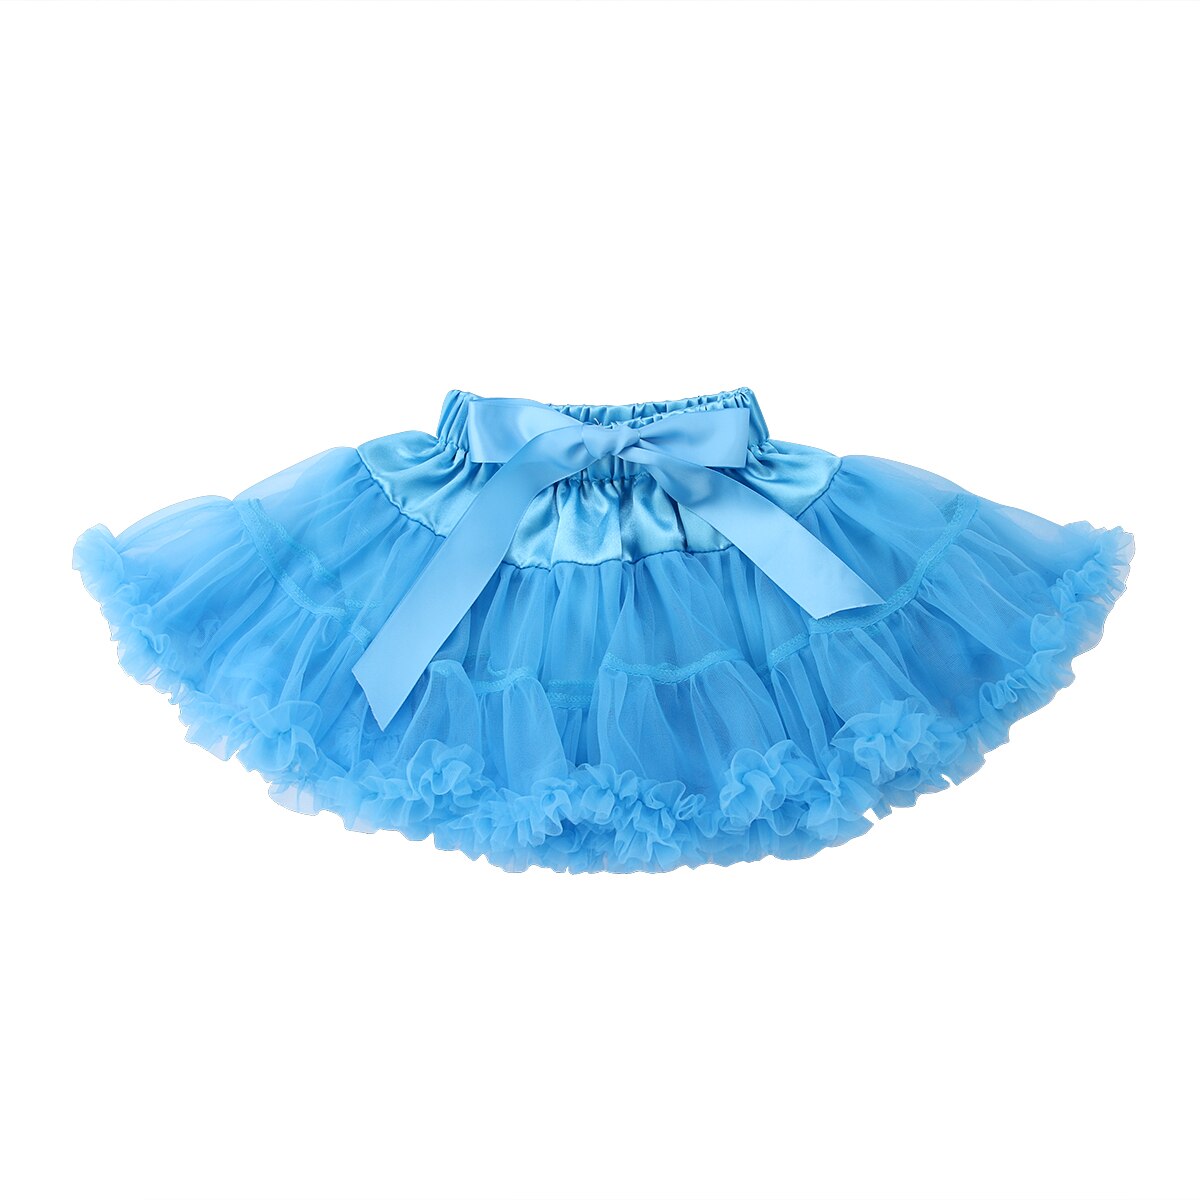 Baby børn piger sommer fluffy tutu kjole nederdel prinsesse fødselsdagsfest underkjole ballet dancewear nederdel 0-24m: Beige